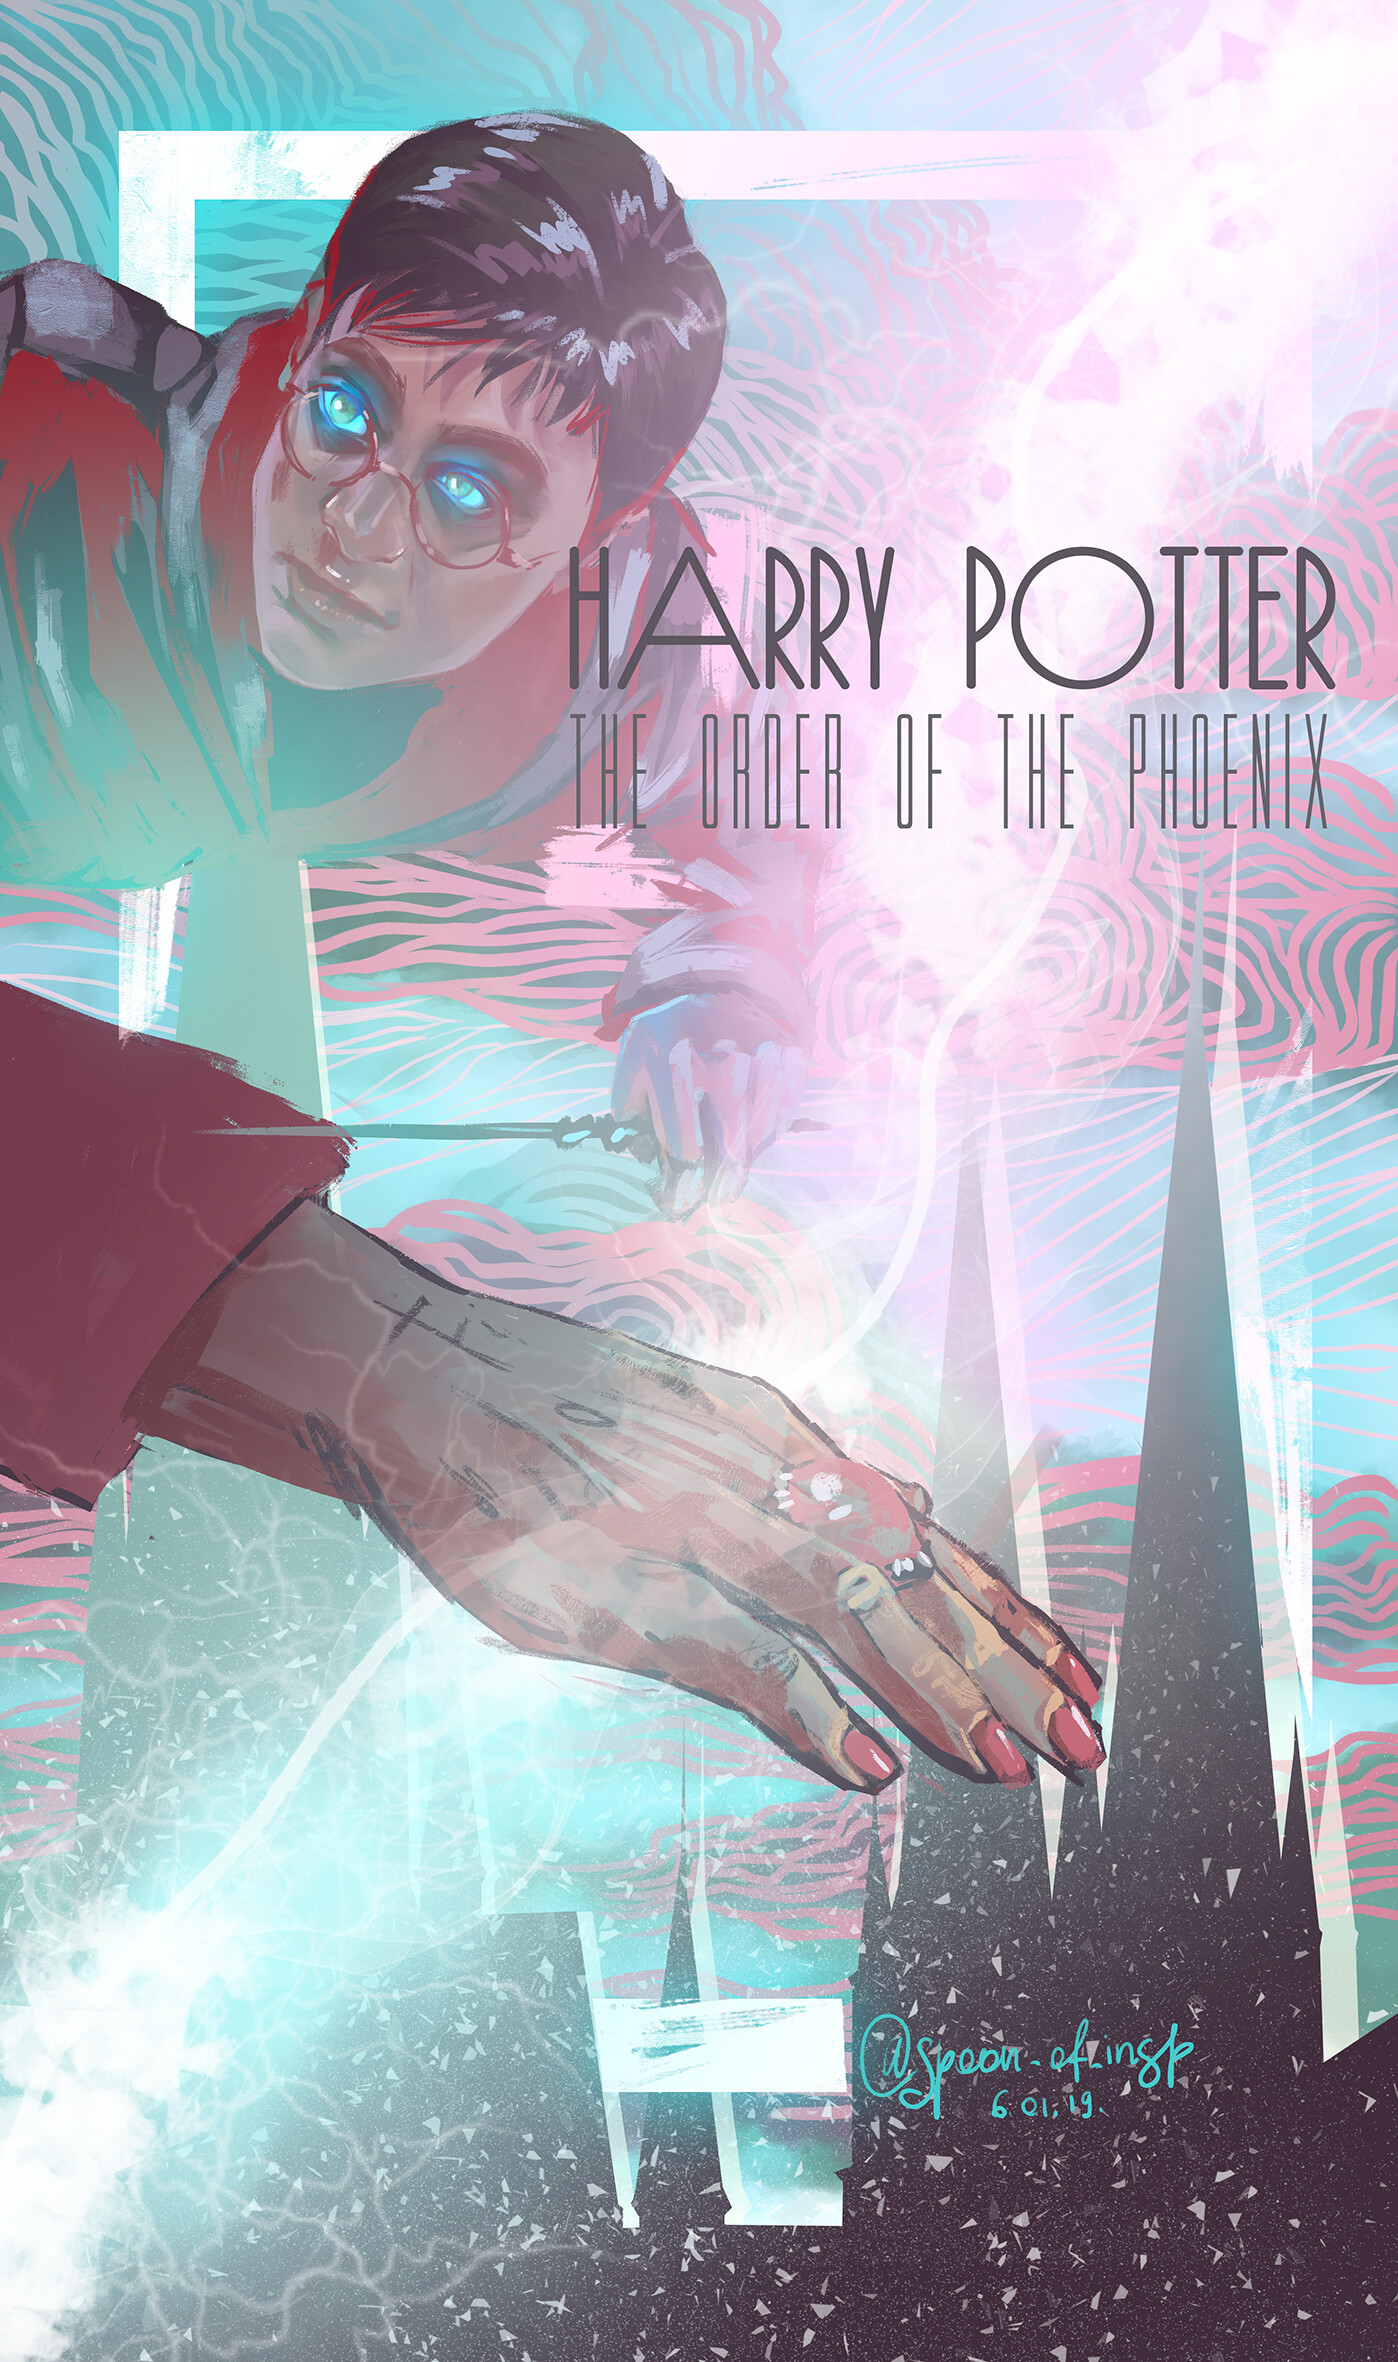 ArtStation - Harry Potter Promotional Posters